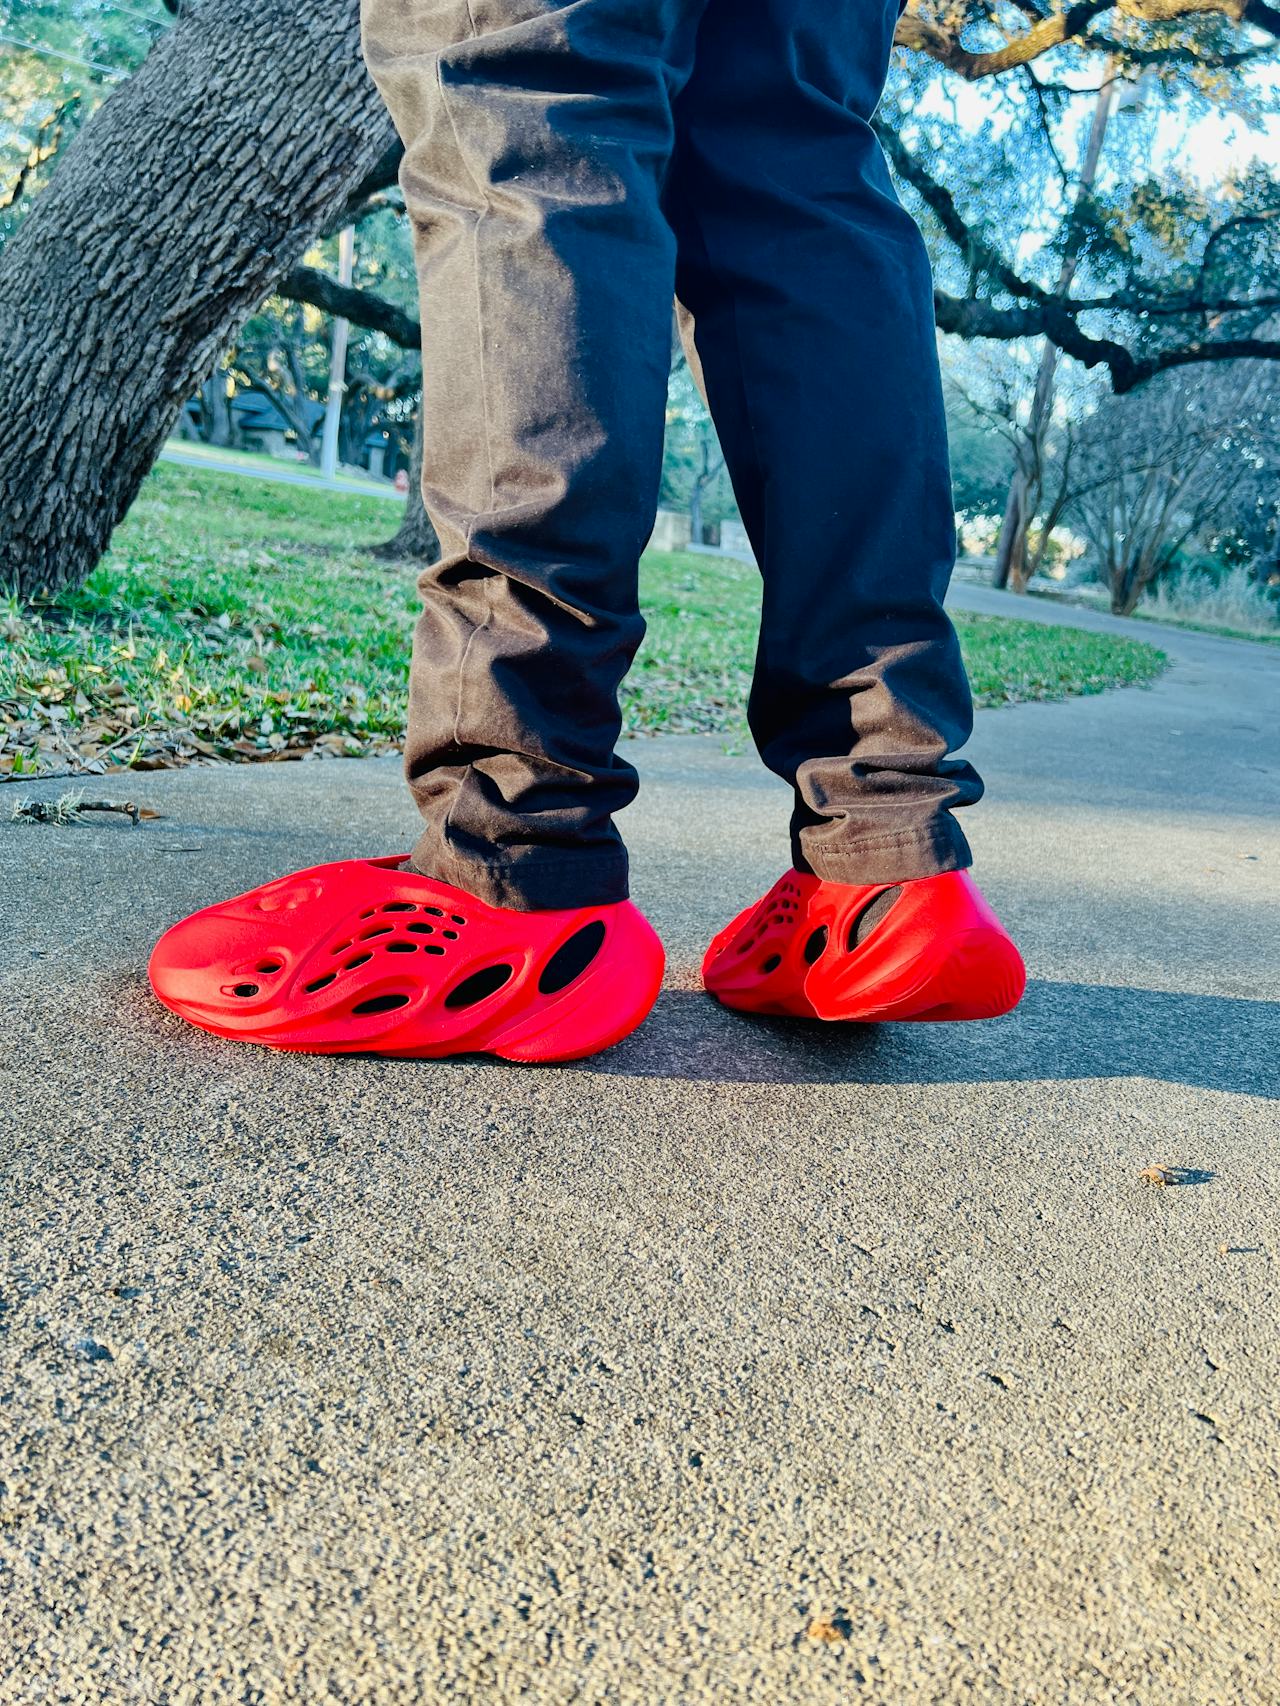 Wearing Kanye's Adidas Yeezy Foam Runner: Best slippers ever?